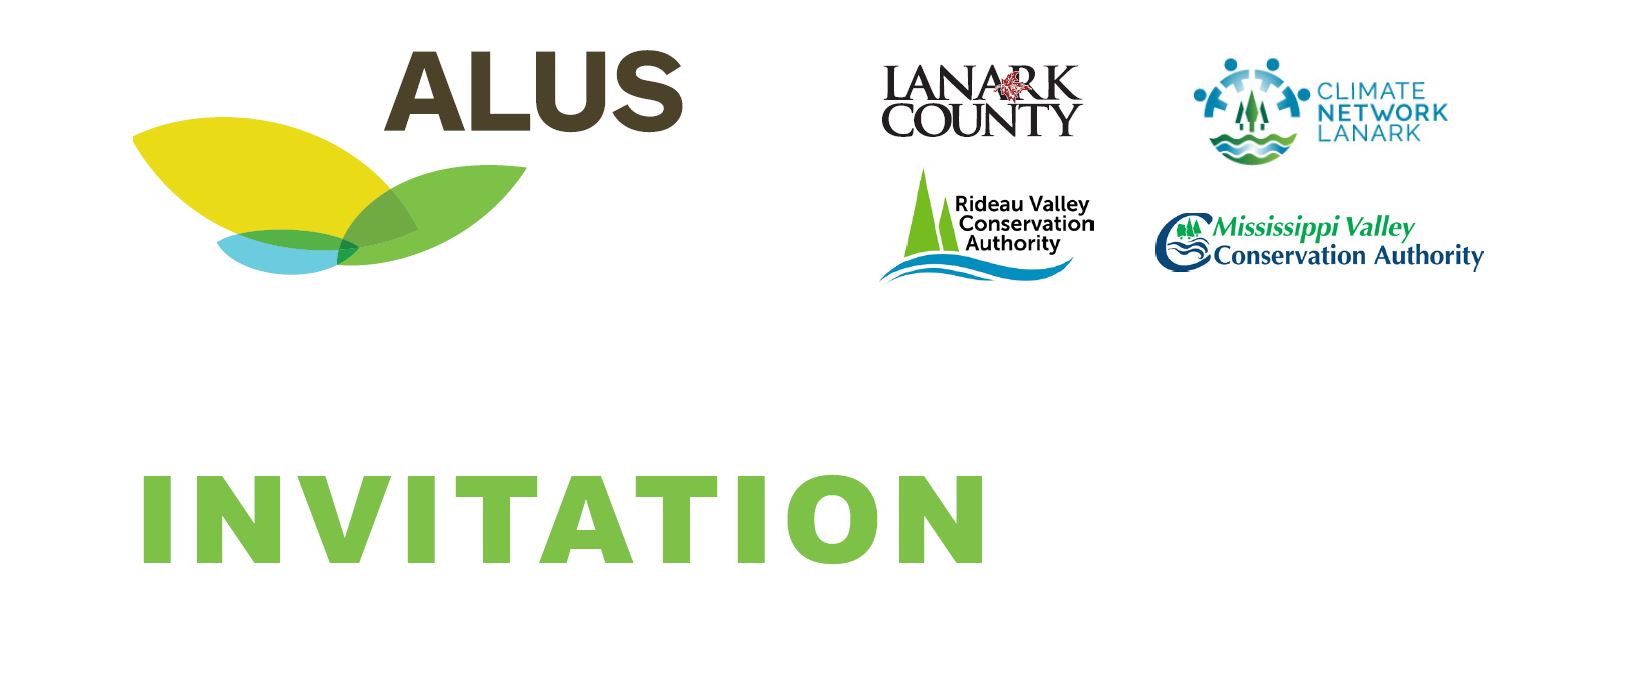 ALUS Logo, Lanark County Logo, Invitation 